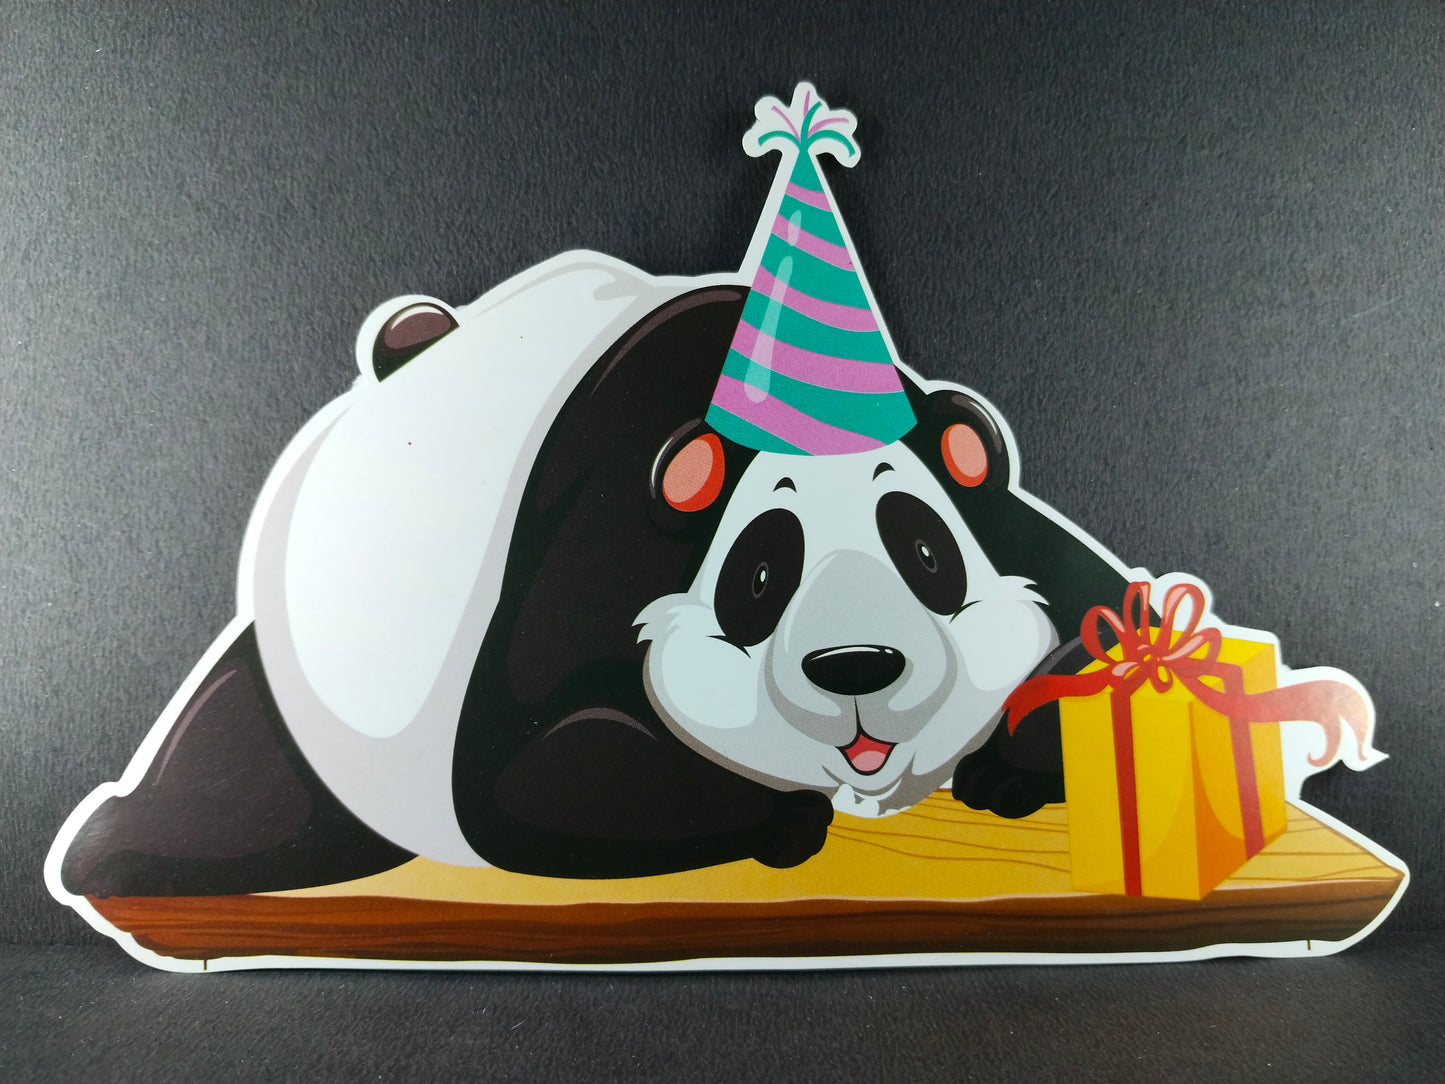 Birthday Decoration Kit - Panda Theme for Simple Birthday Decorations at Home